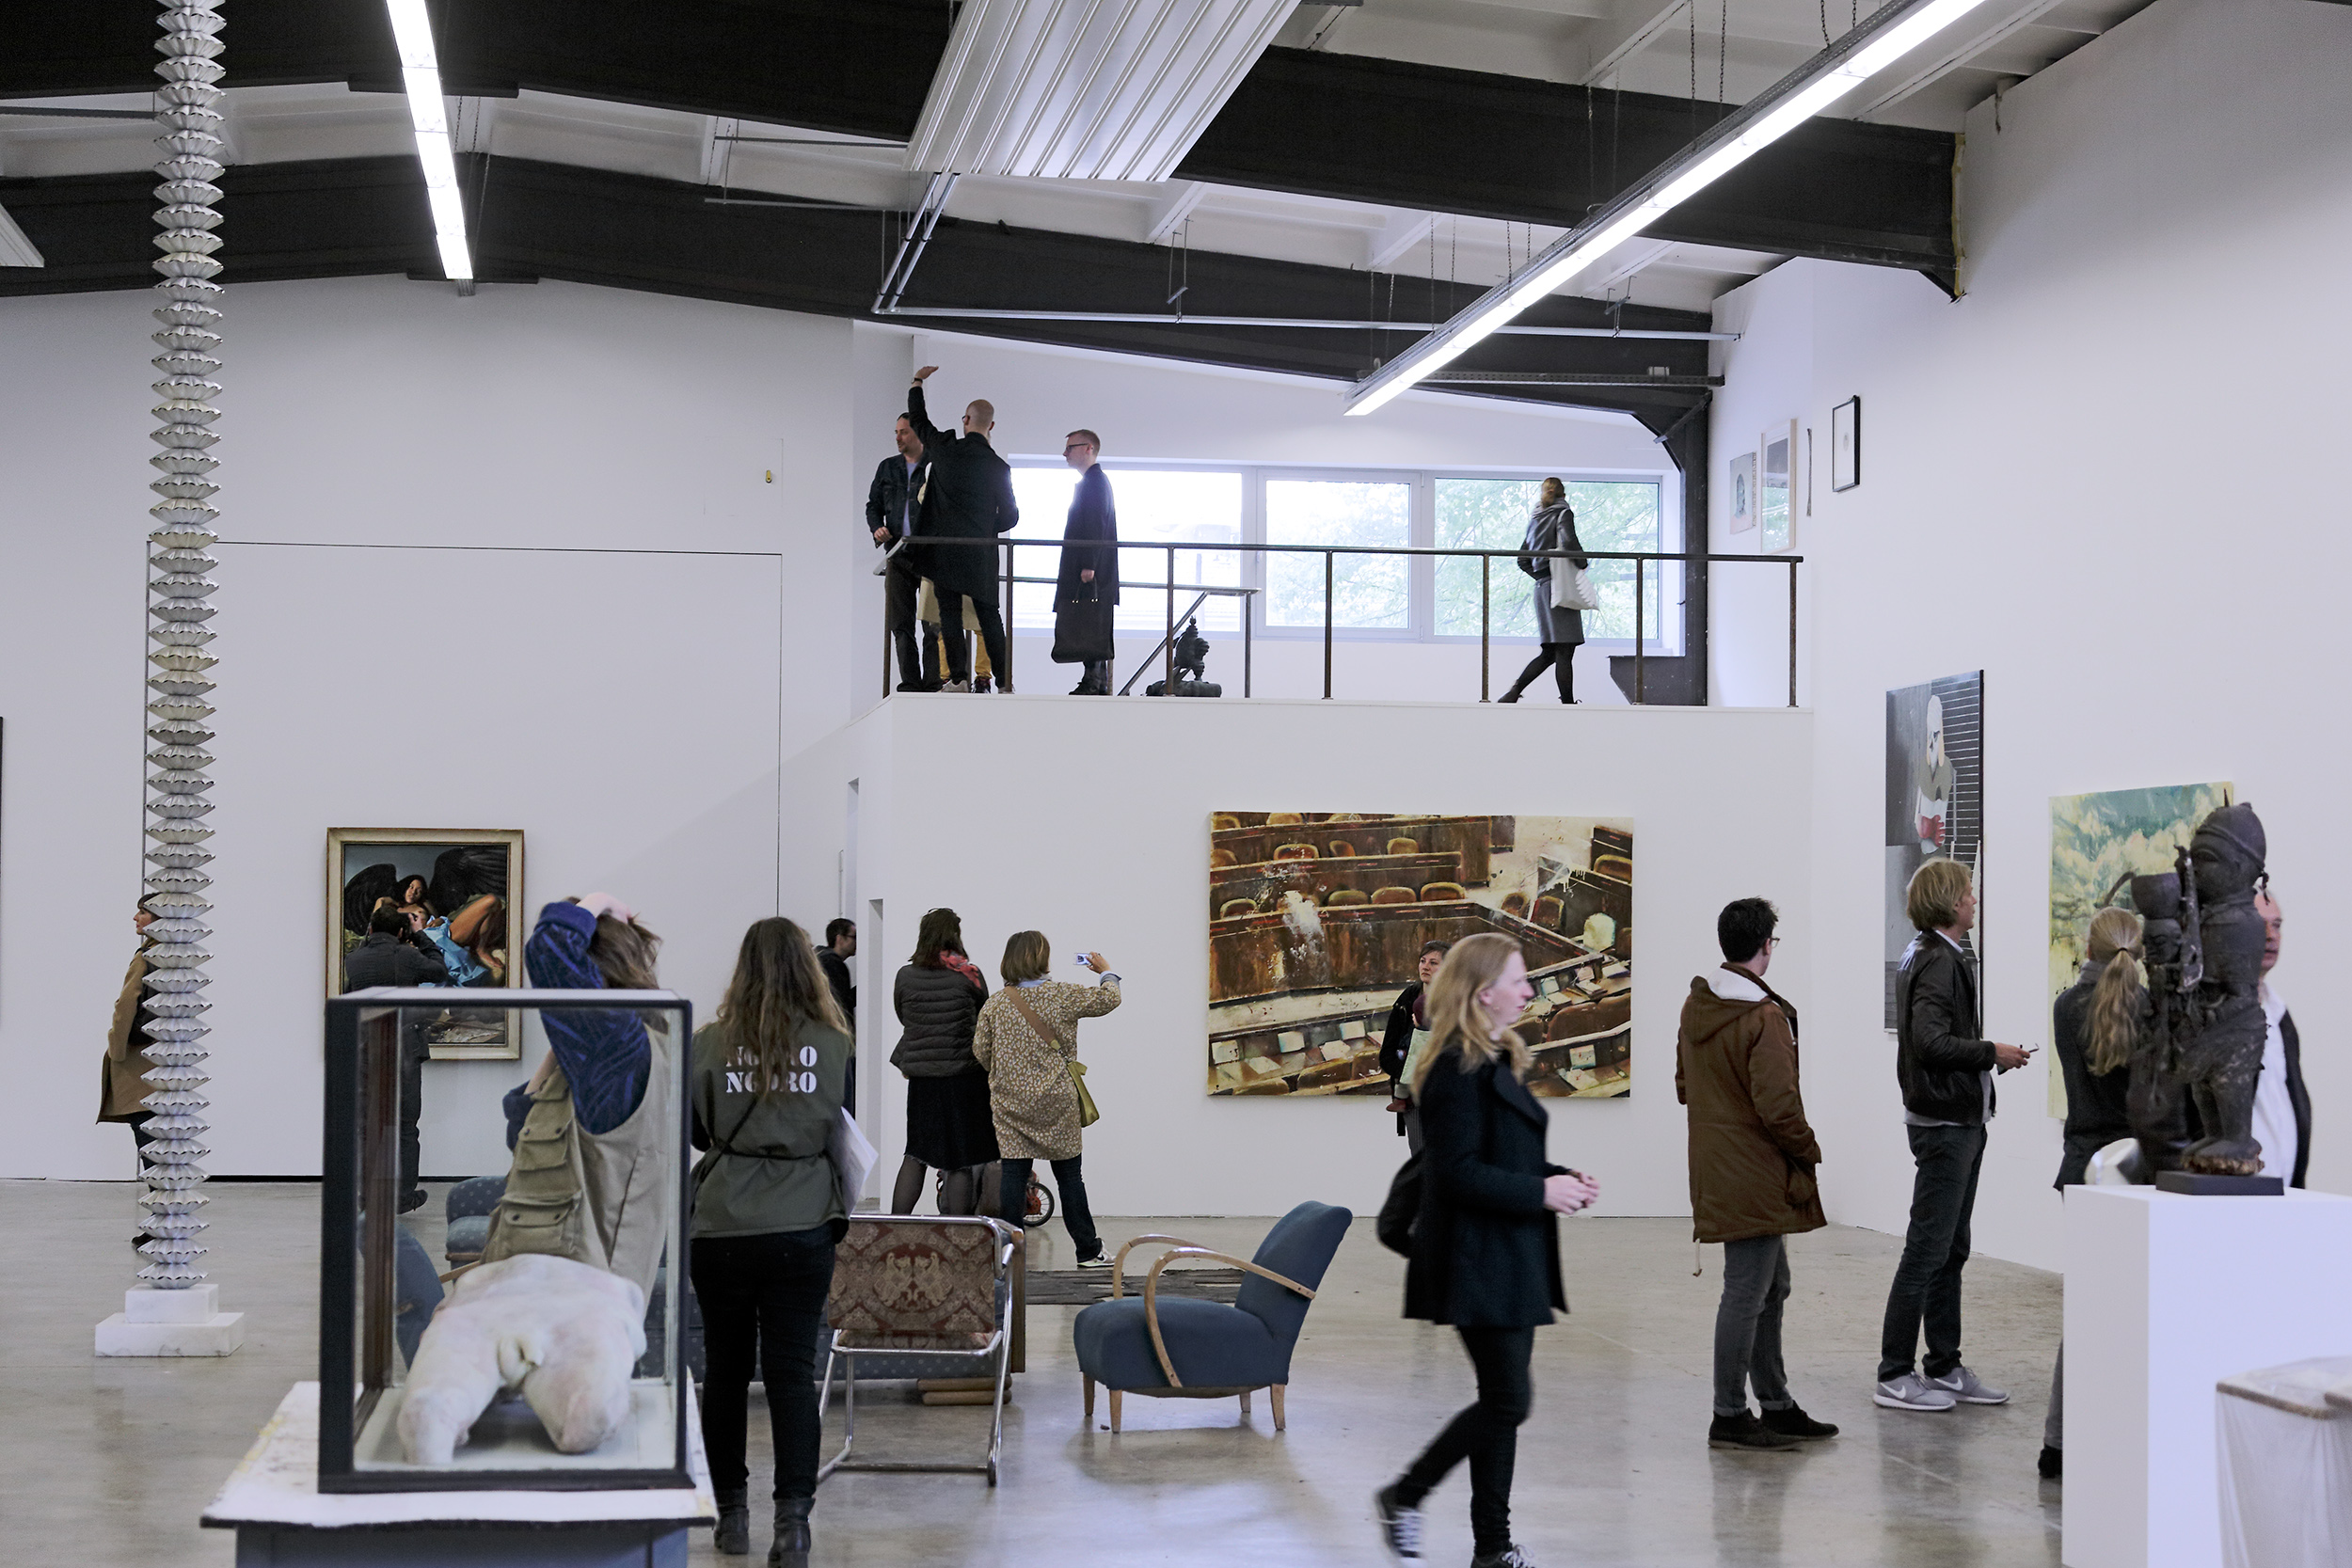 Berlin Museum of Modern Art's groundbreaking event set for December